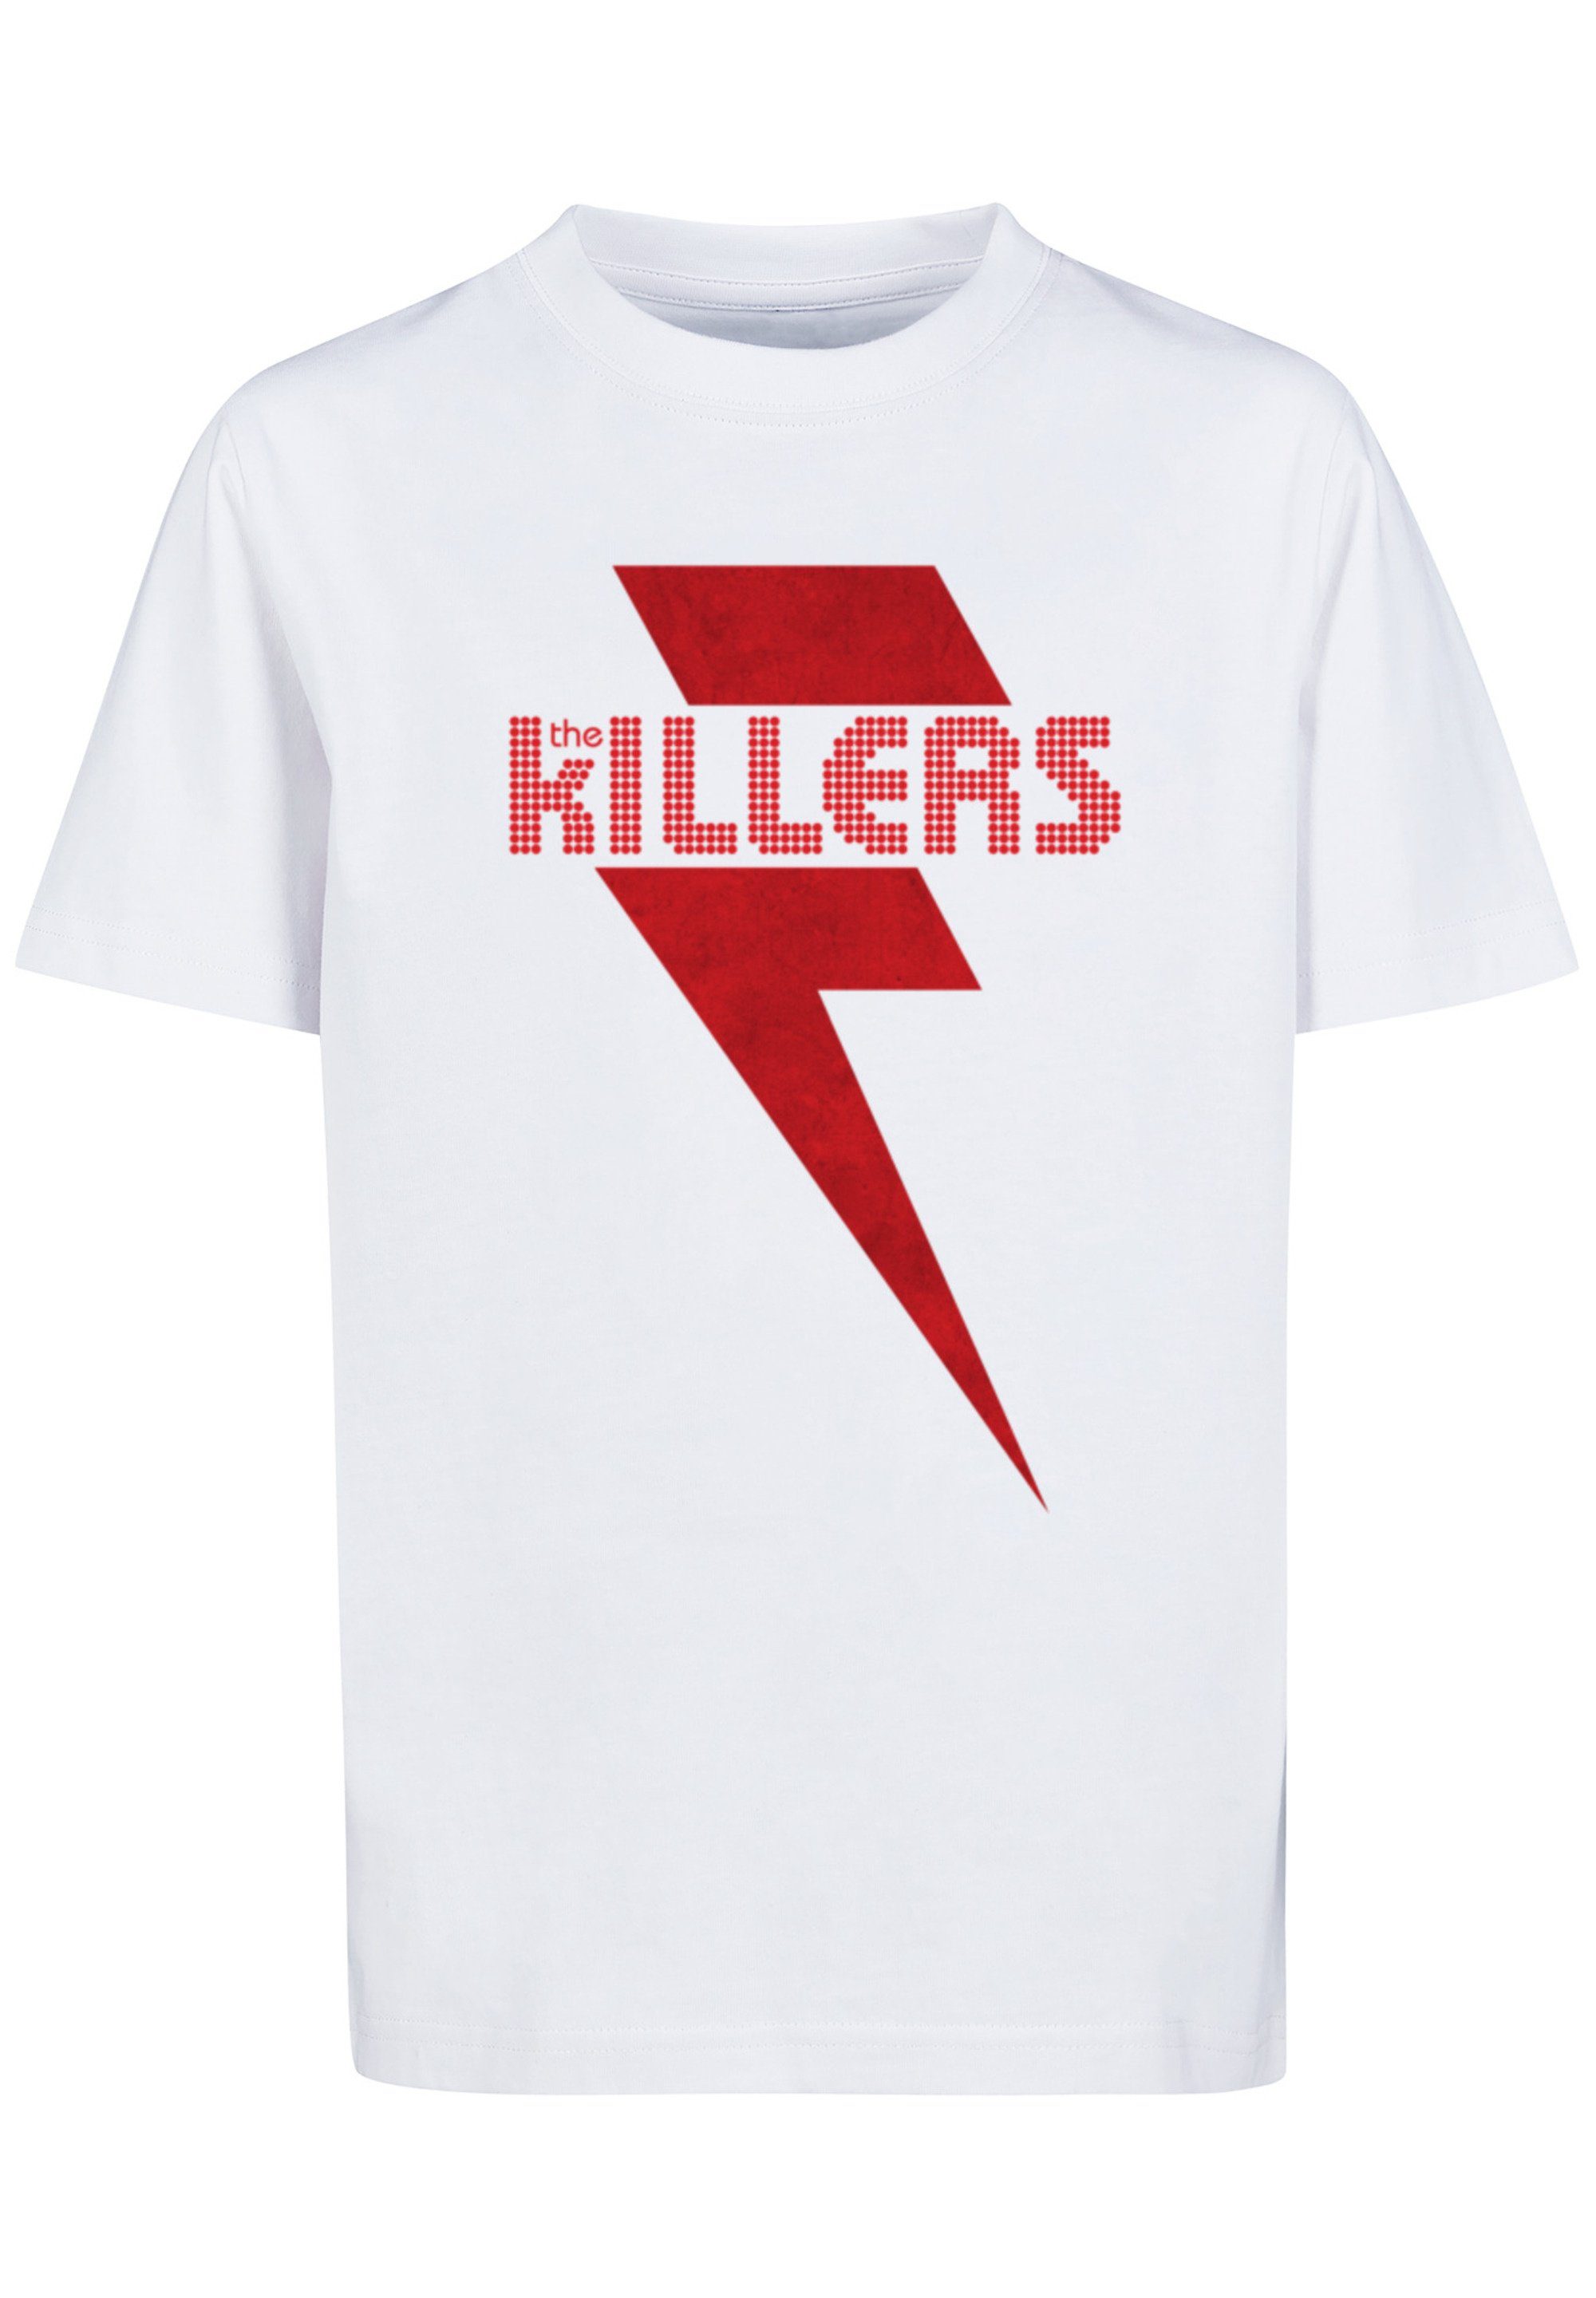 F4NT4STIC T-Shirt The Killers Rock weiß Red Band Bolt Print